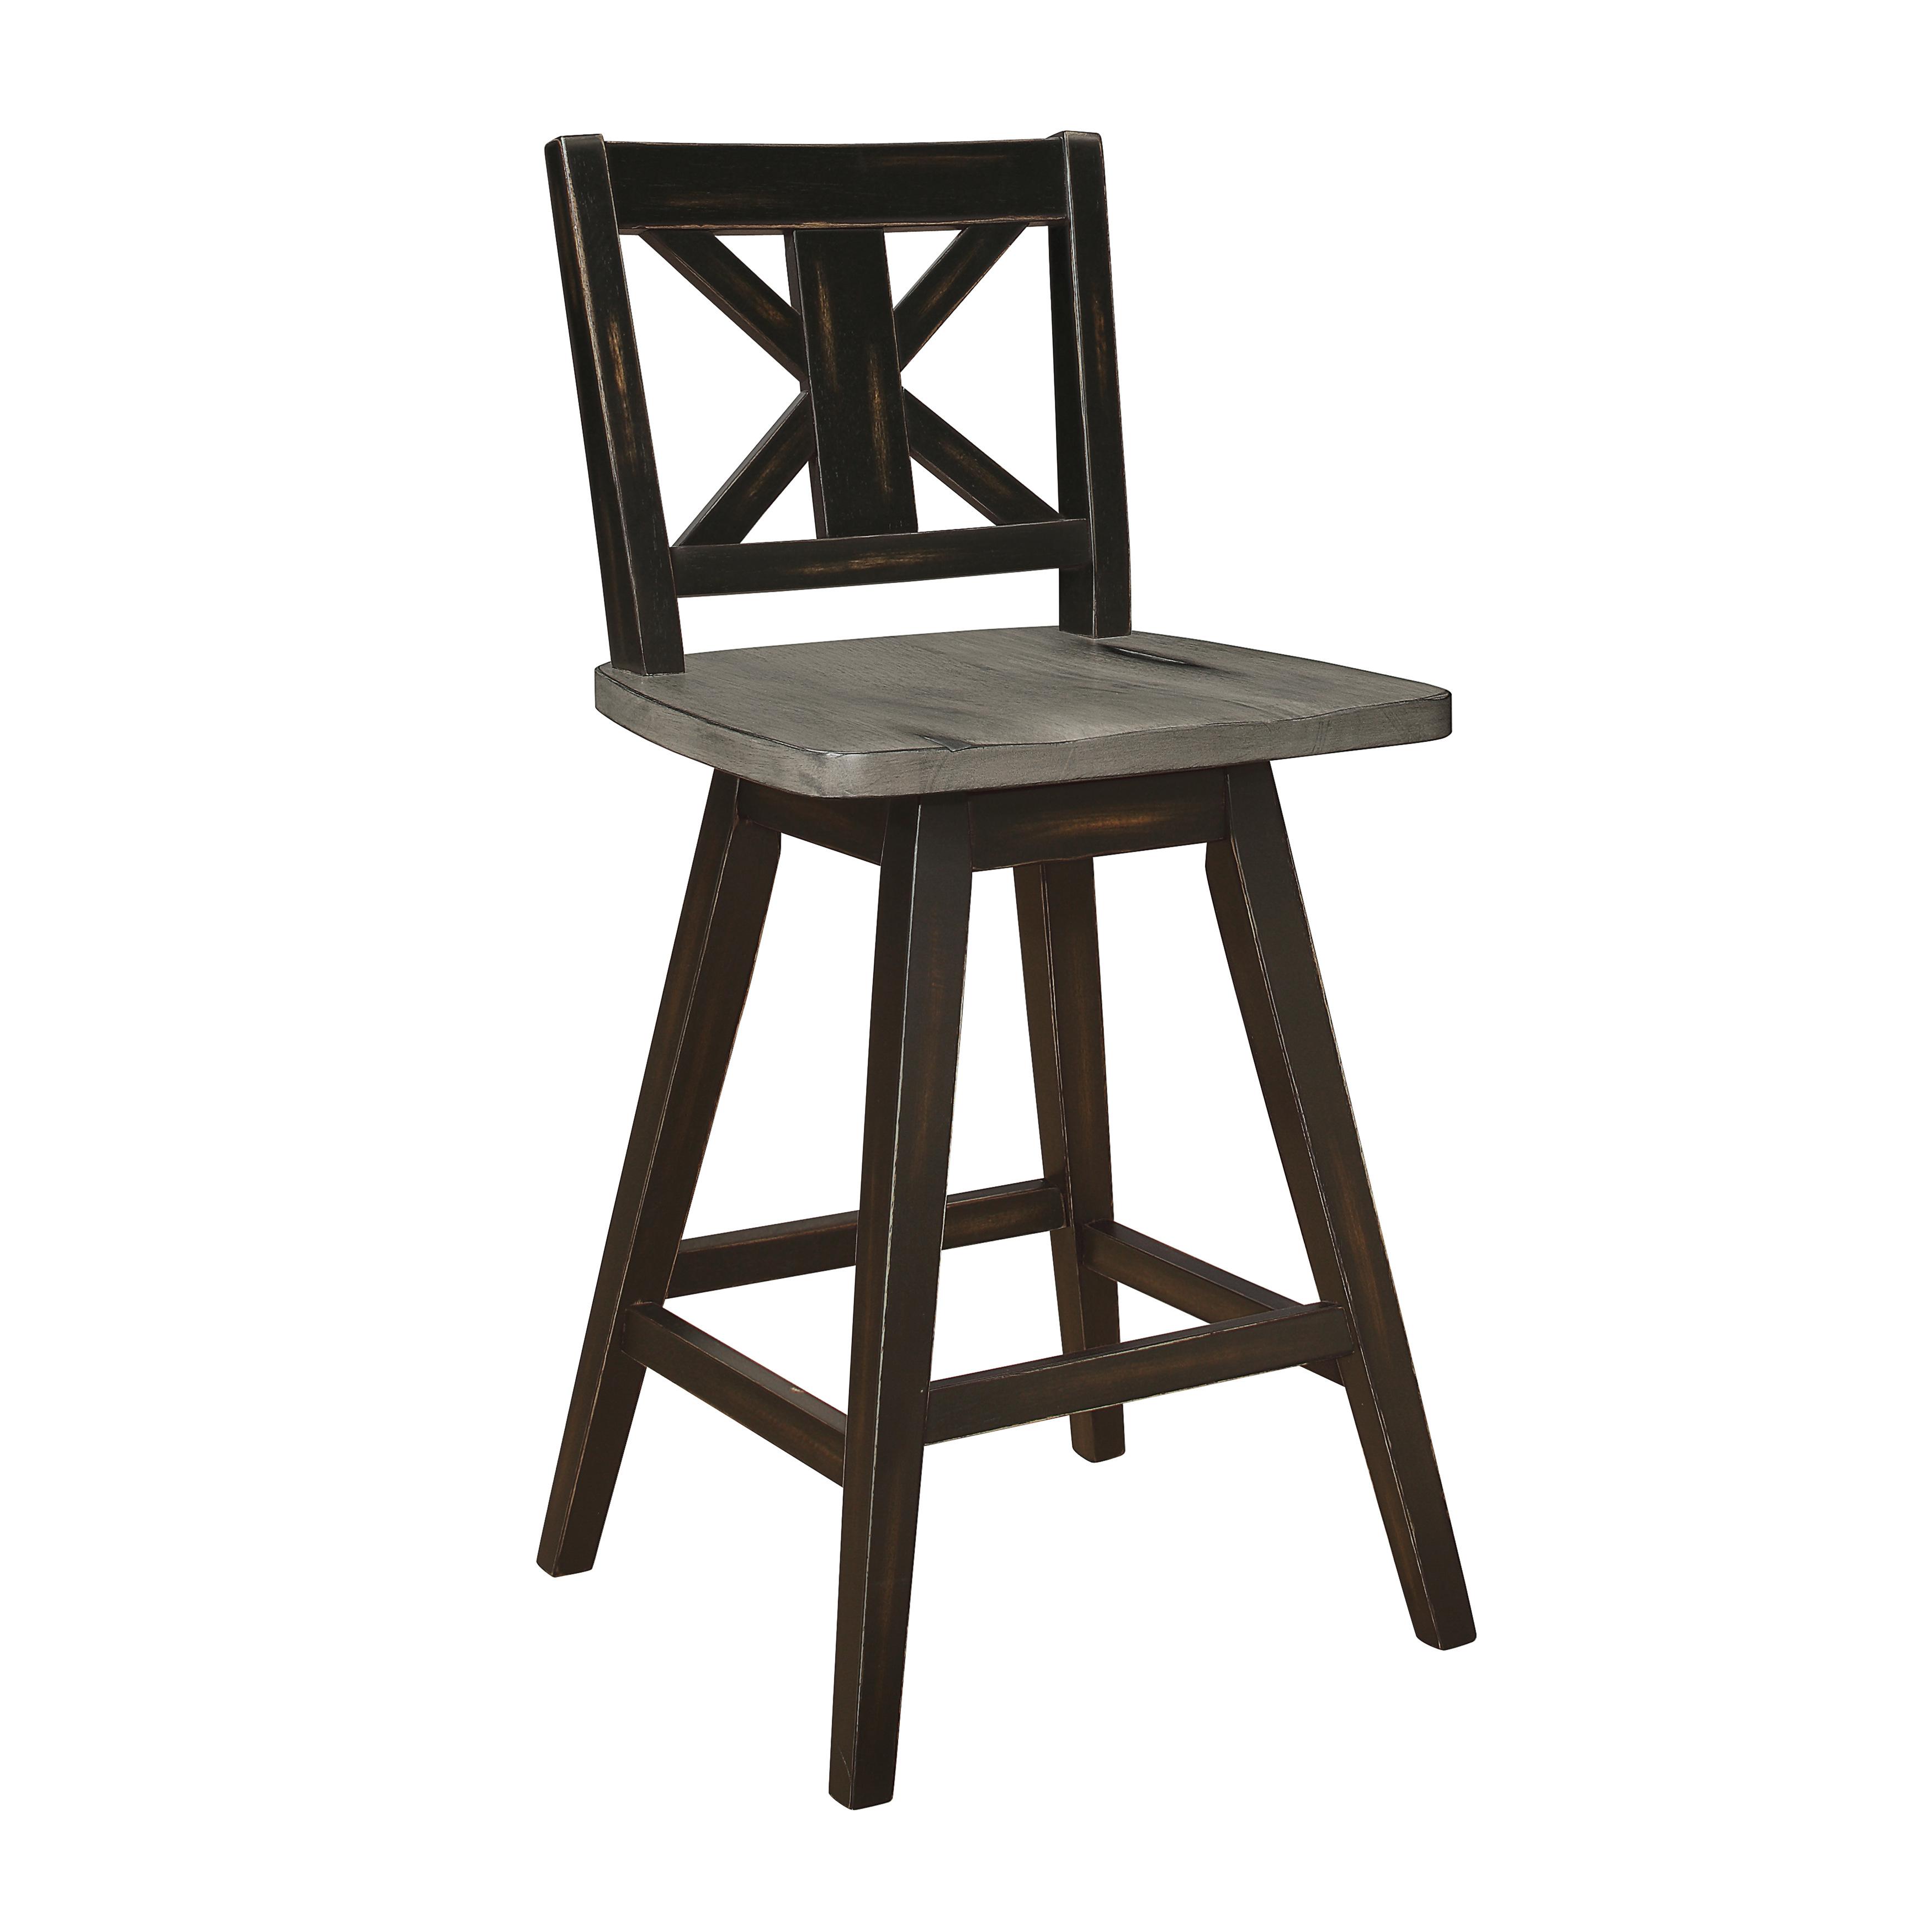 Rustic Counter Height Chair 5602-24BK Amsonia 5602-24BK in Gray, Black 